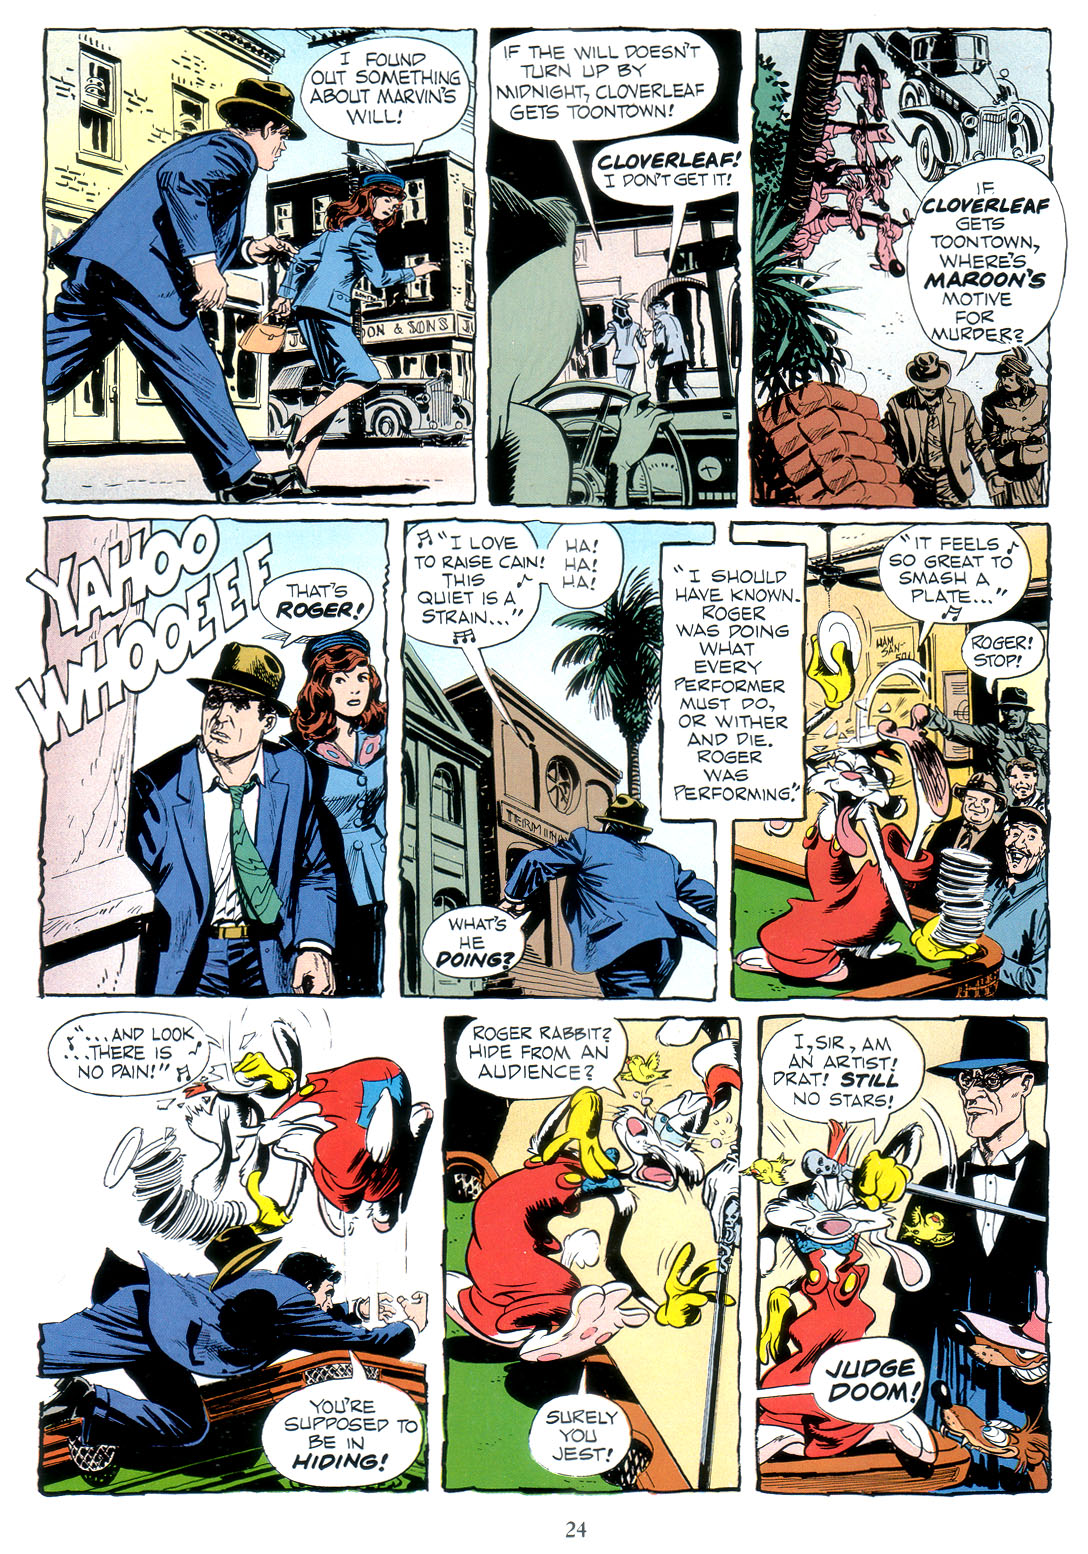 Marvel Graphic Novel issue 41 - Who Framed Roger Rabbit - Page 26